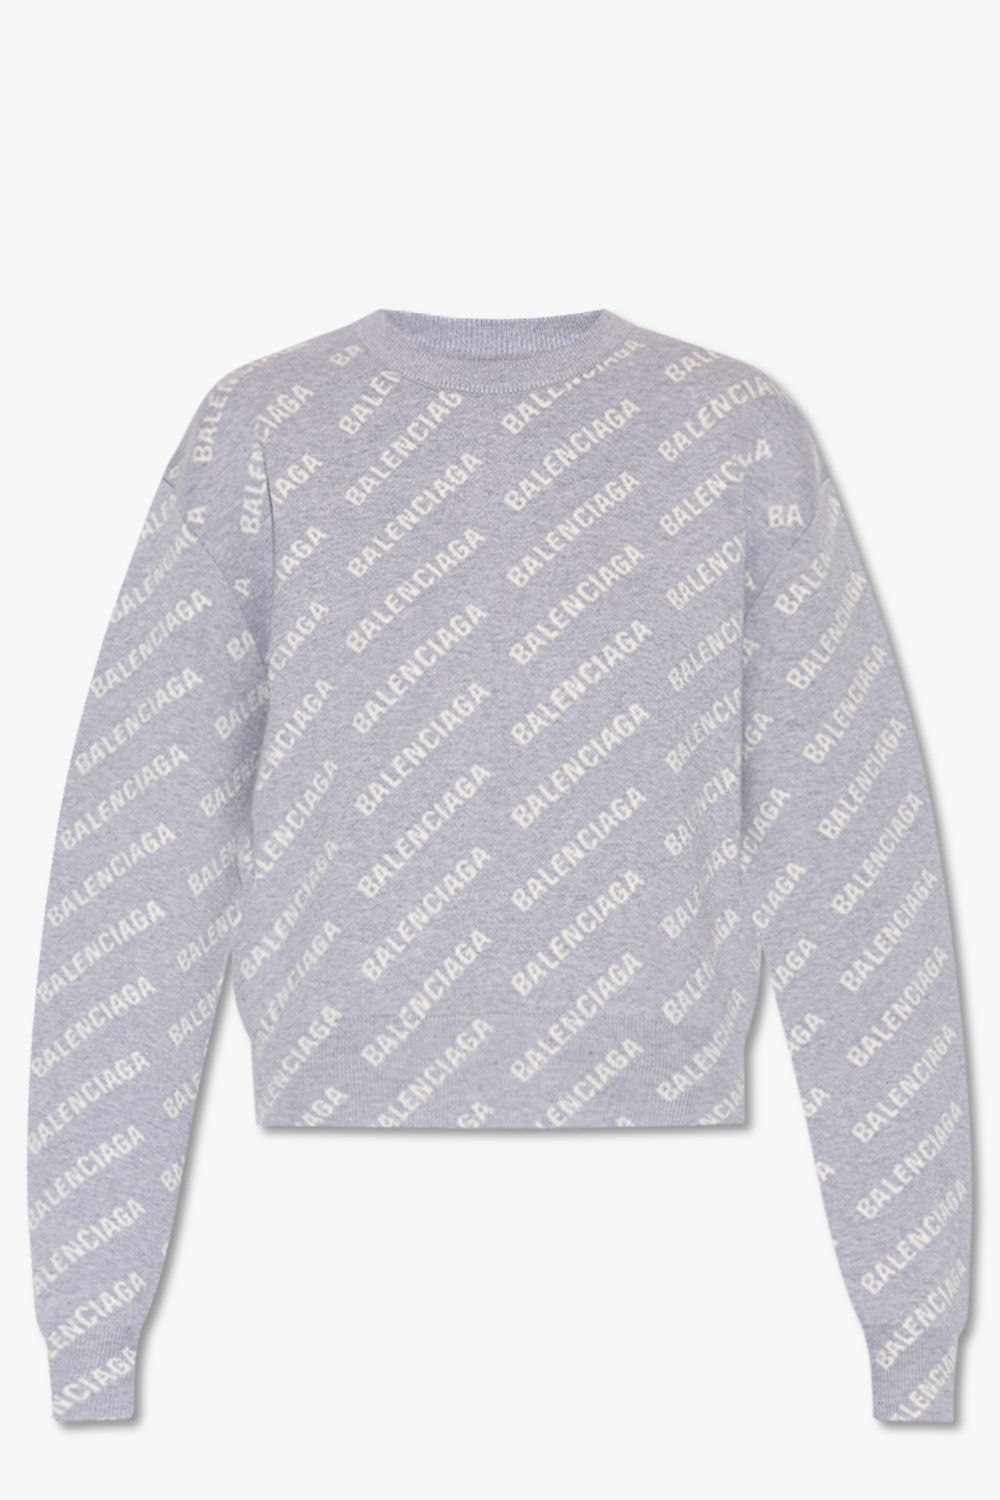 Regnbue salvie genert Qasimi Belonging short-sleeved T-shirt - IetpShops Germany - Patterned sweater  Balenciaga